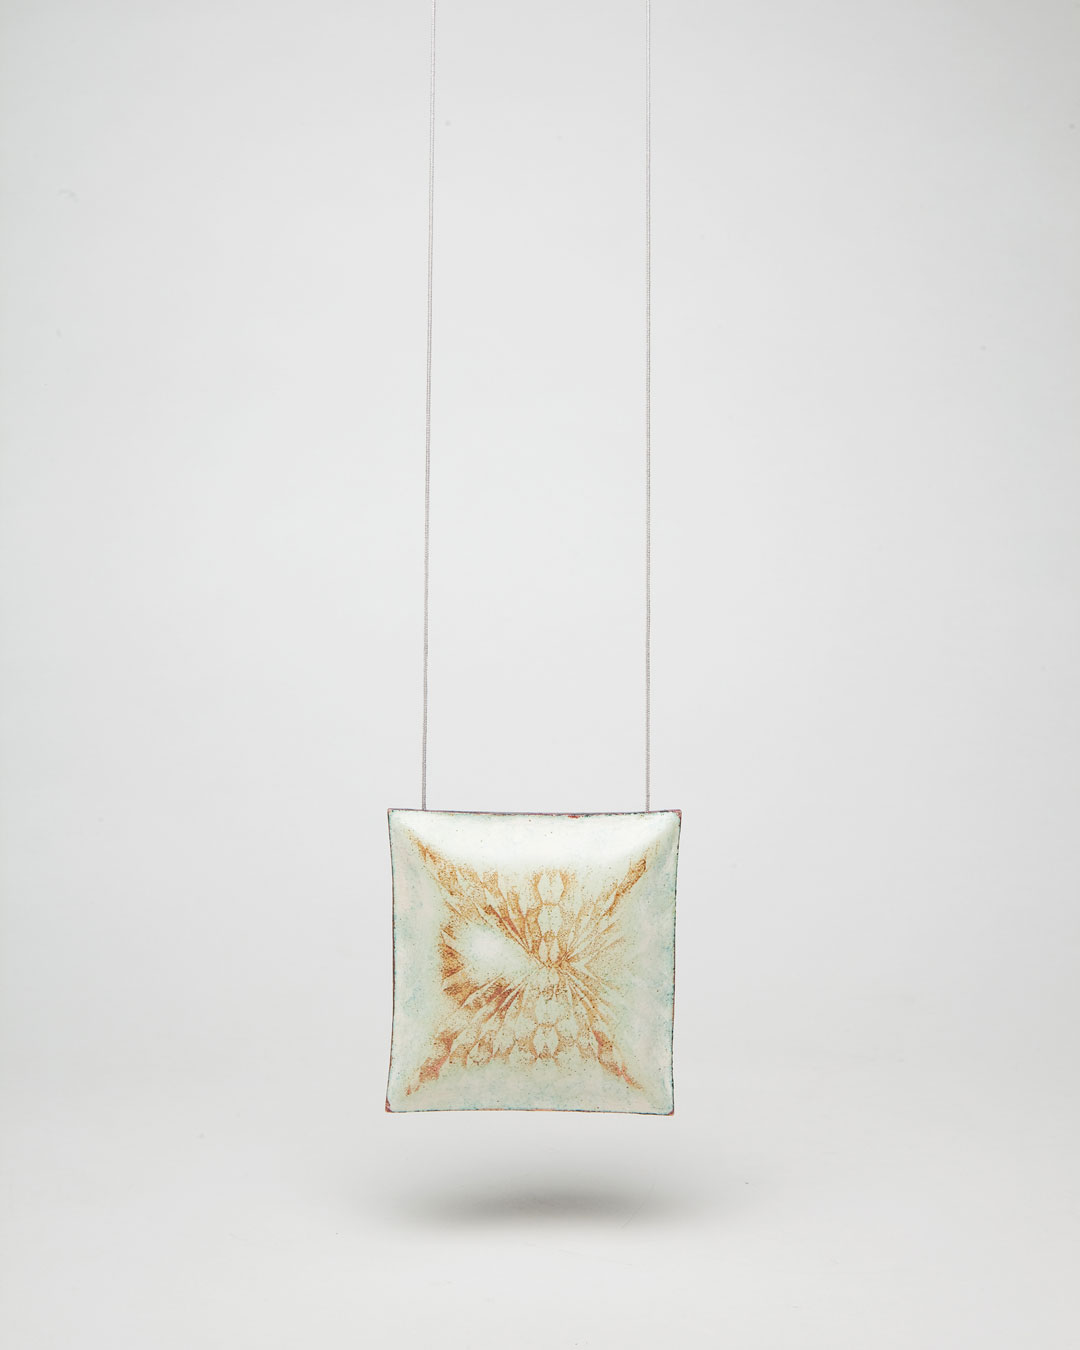 Nicole Beck, Angel, 2018, necklace; copper, enamel, thread, 95 x 90 x 25 mm, €1500